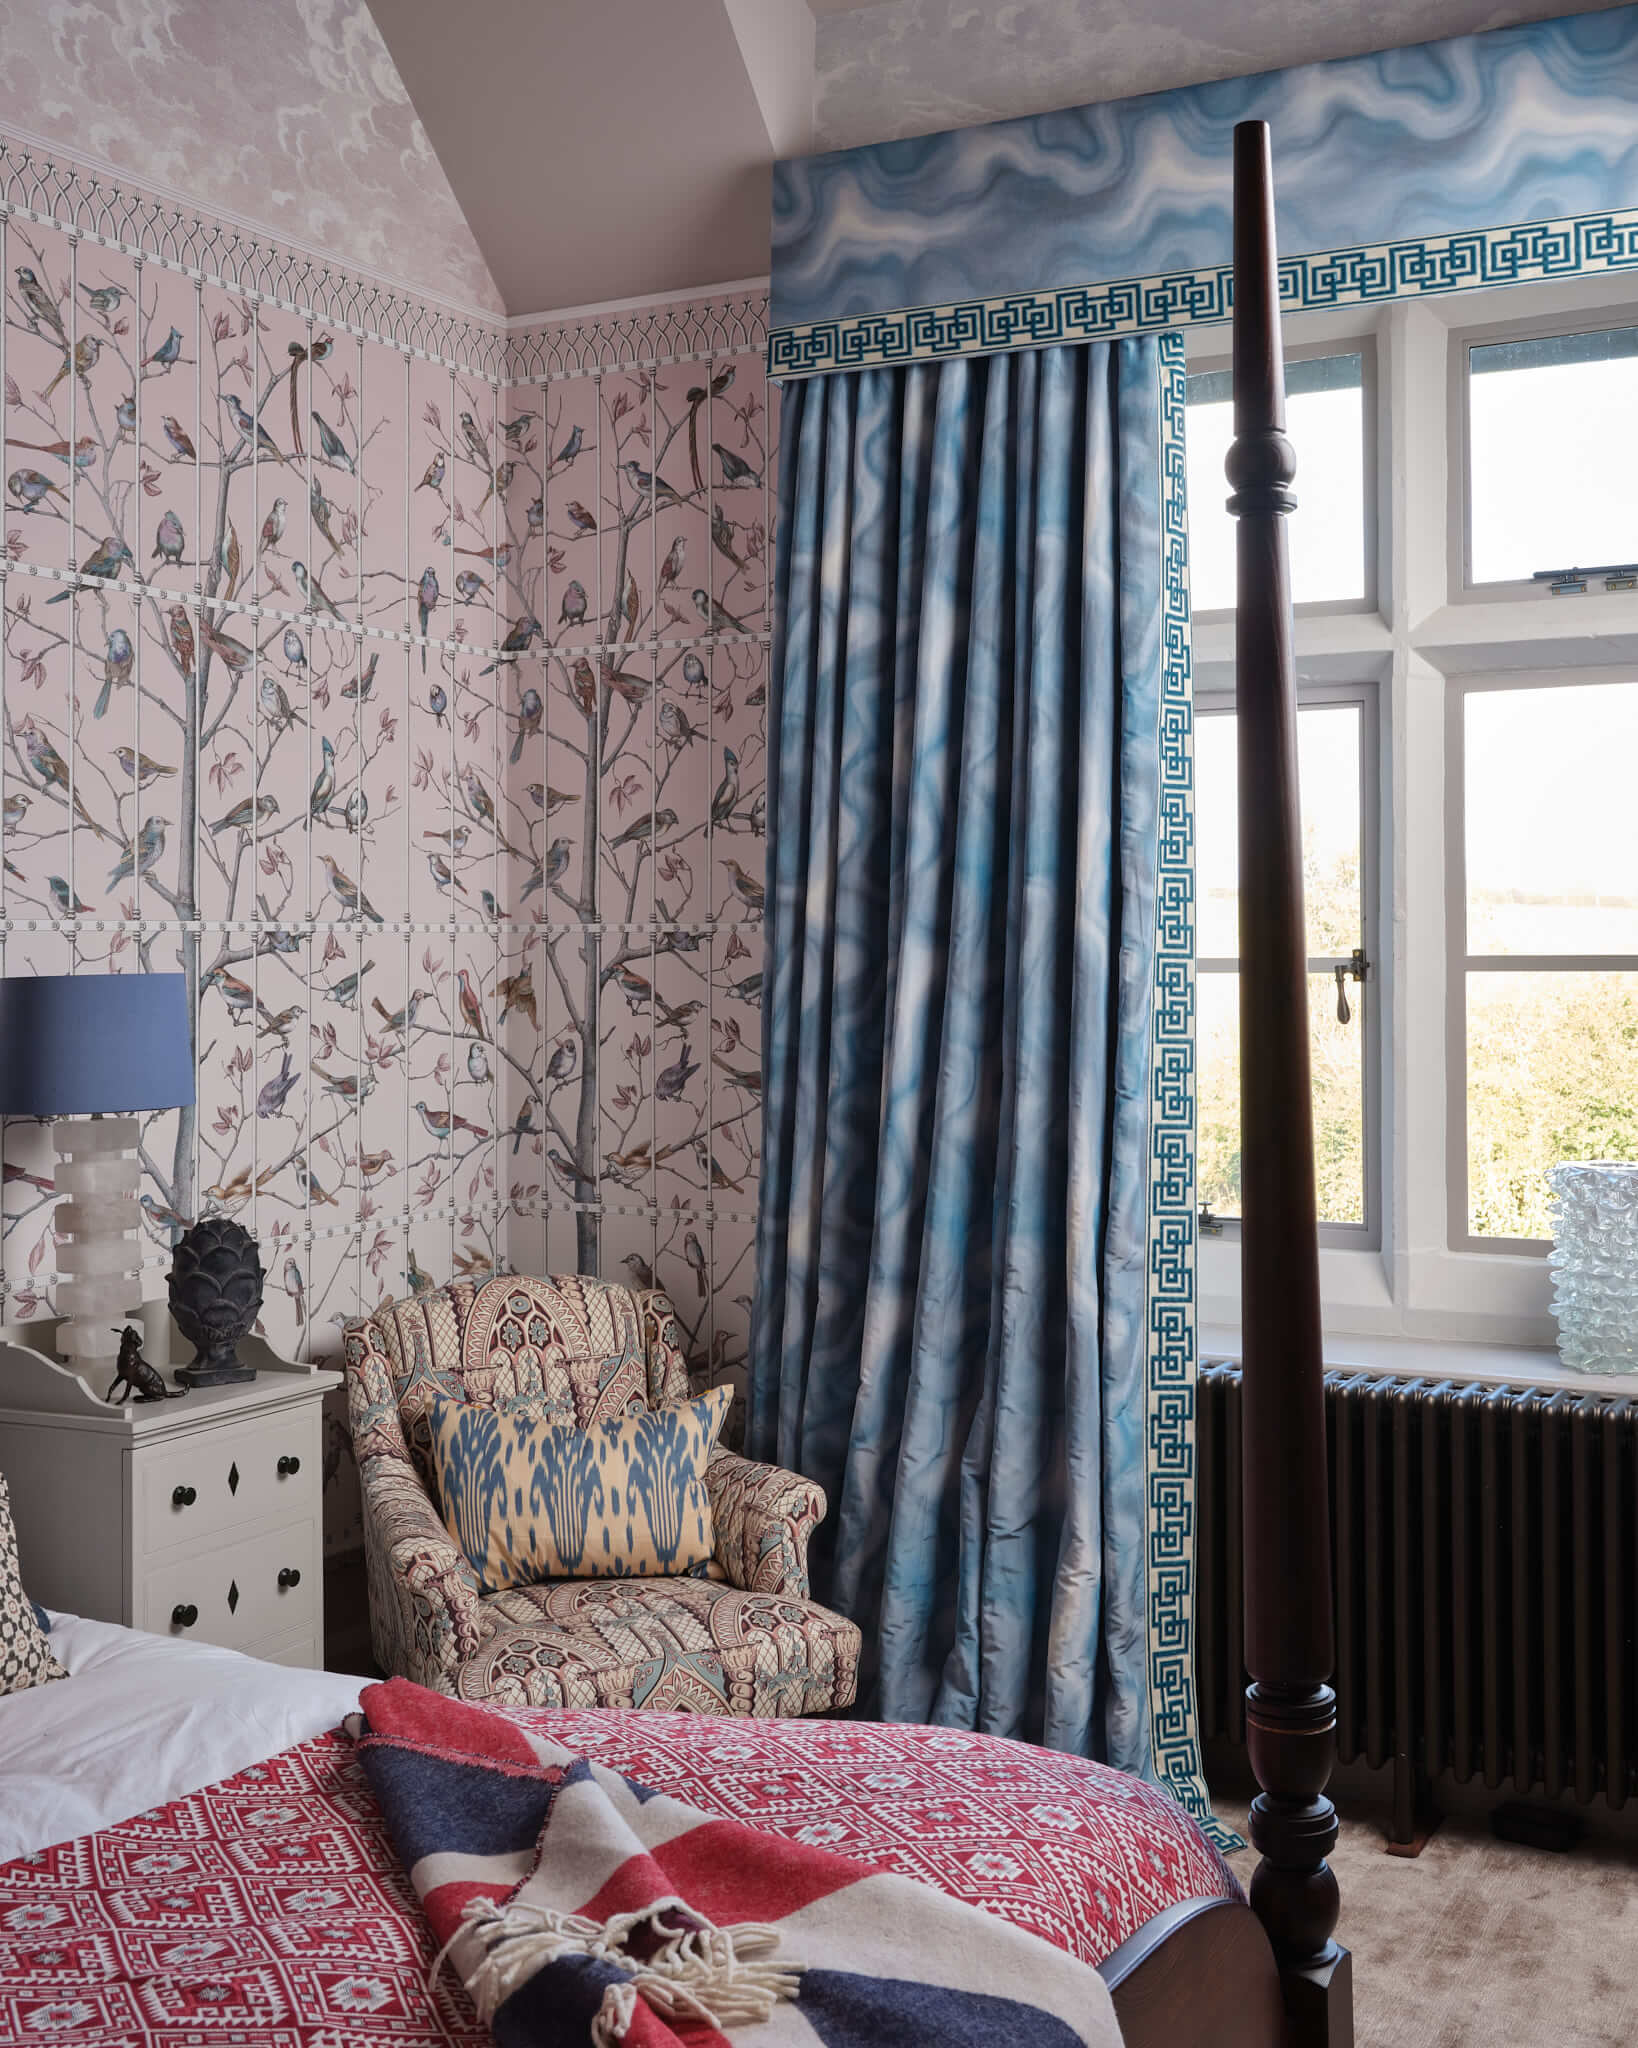 High Victorian Gothic Rectory interior bedroom